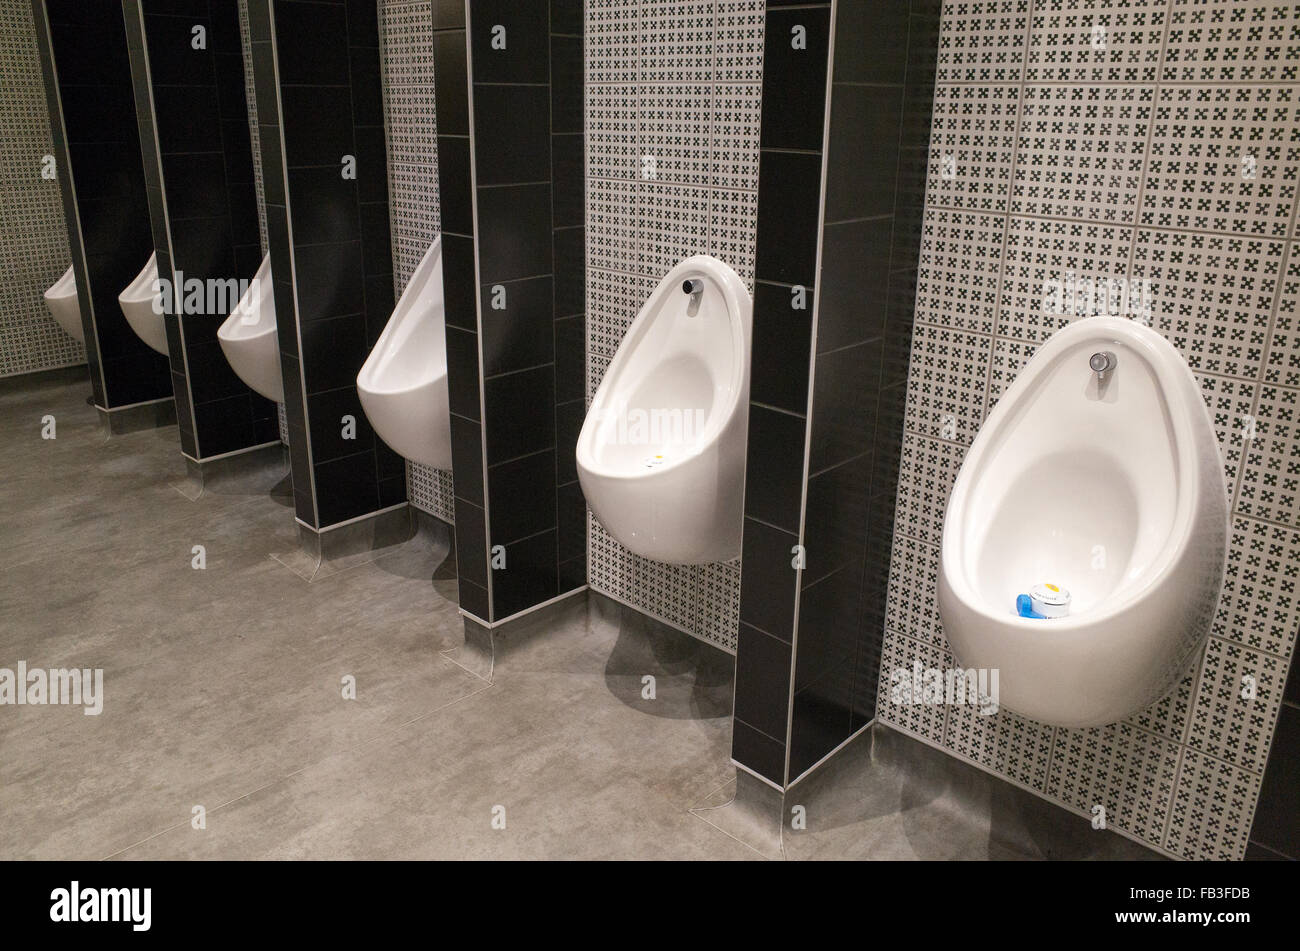 Men's toilets at Wetherspoon's pub, England, UK Stock Photo